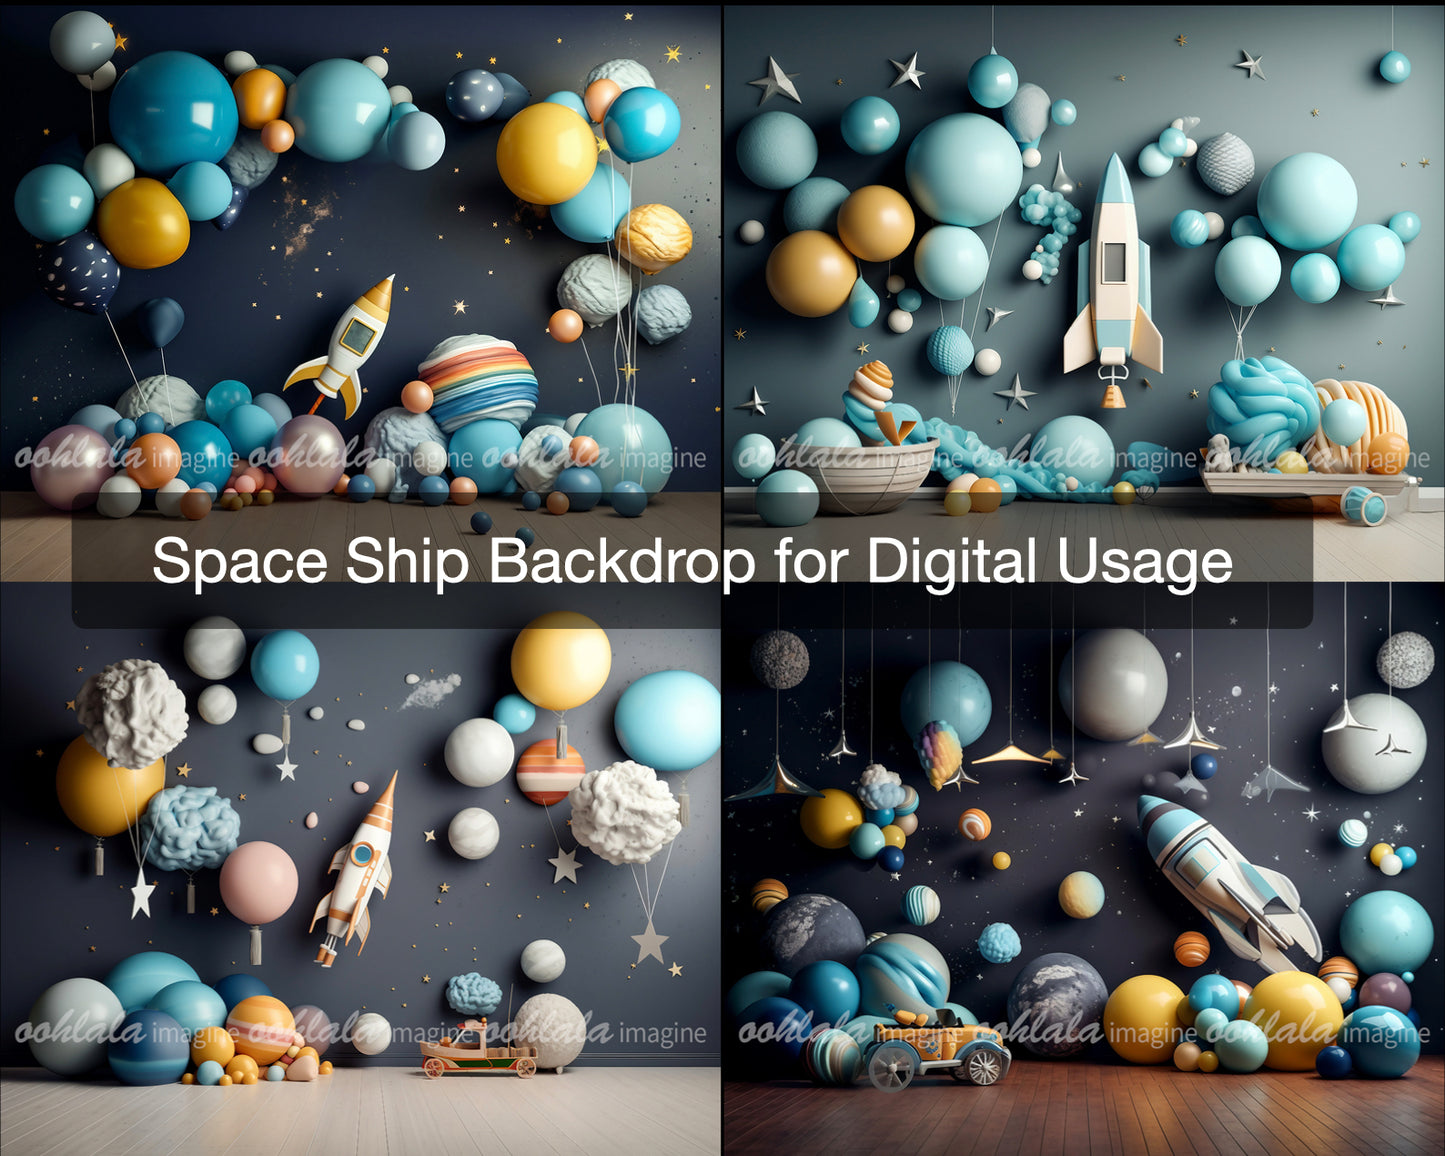 Birthday Space Ship Digital Backdrop Set of 8